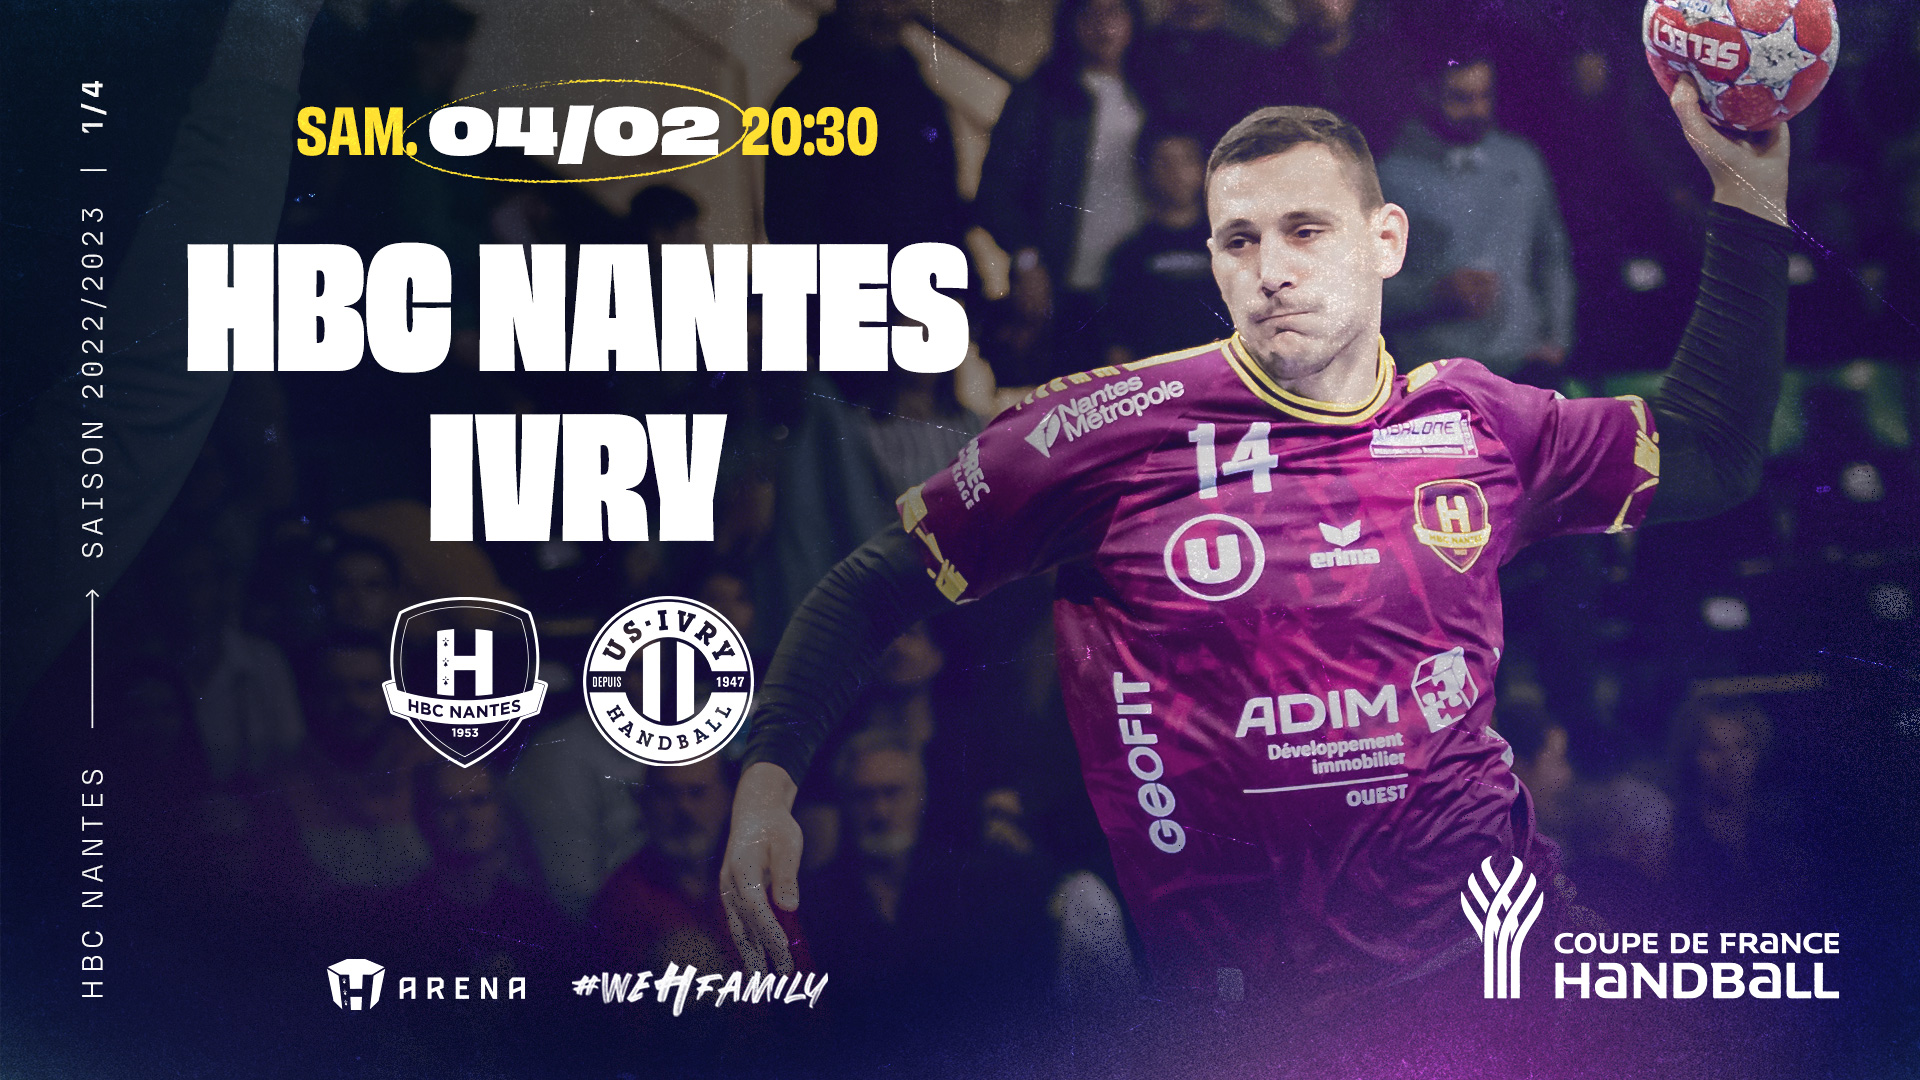 HBC Nantes - Ivry : Programme de match